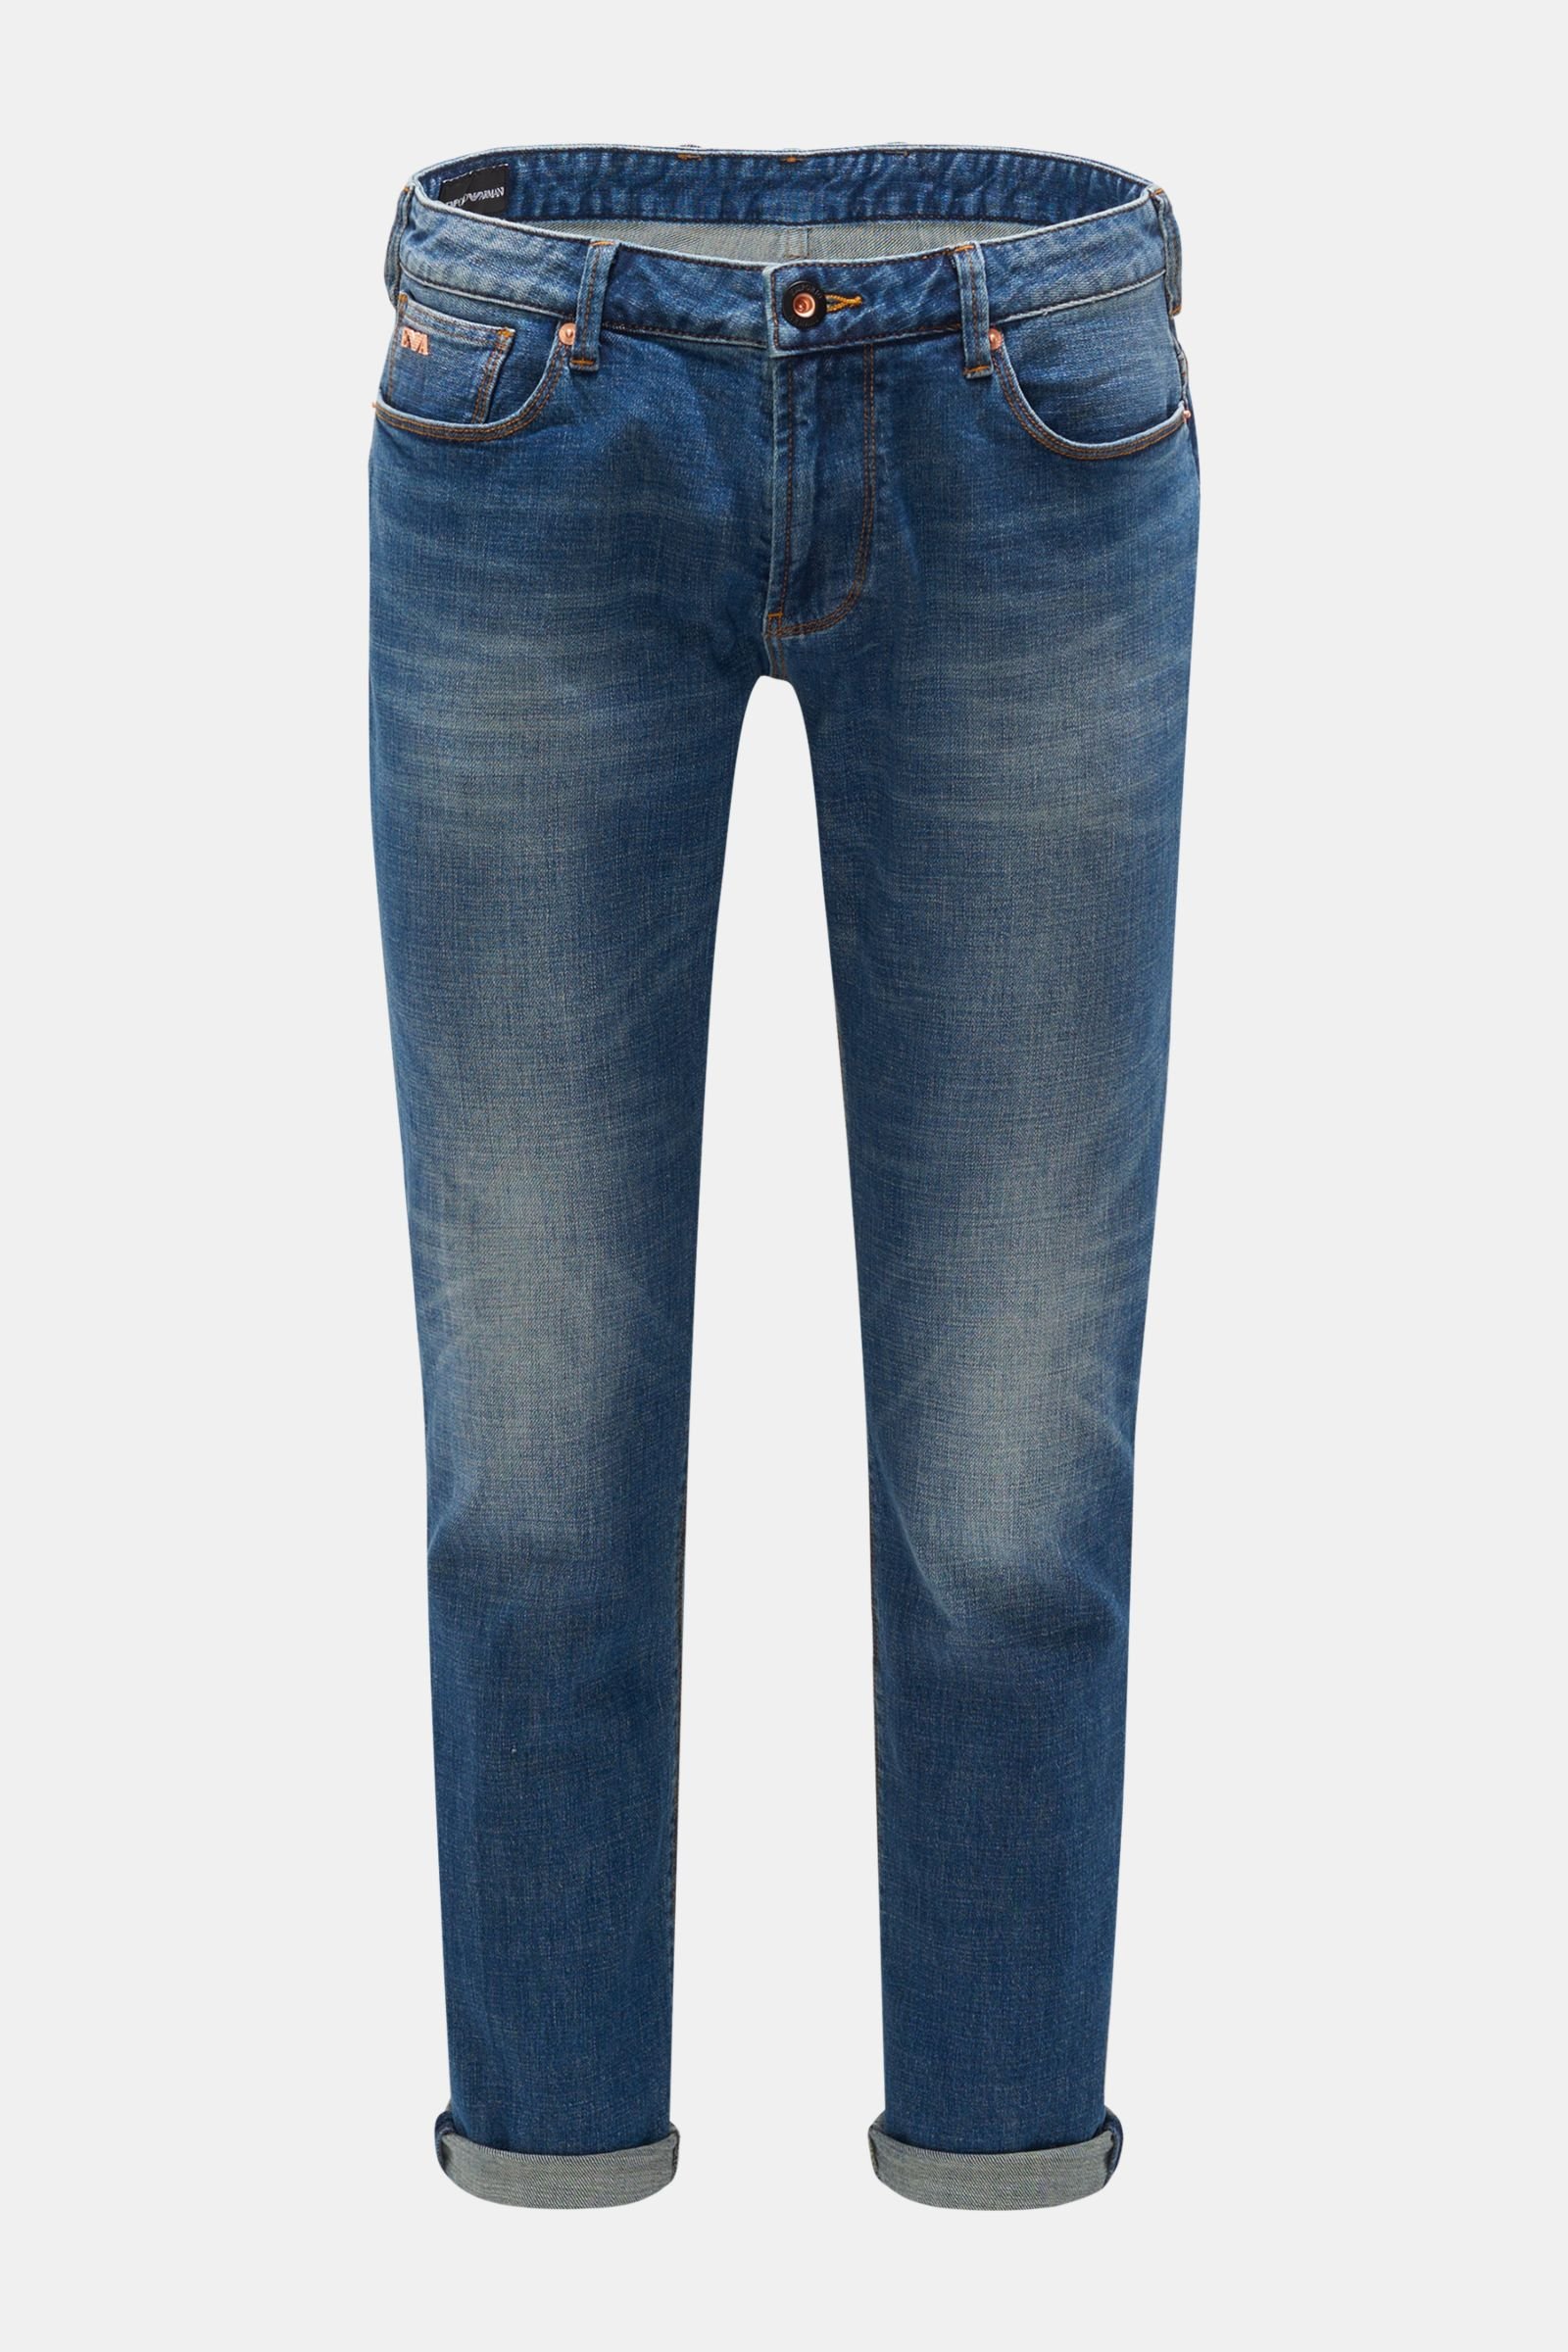 Jeans grey-blue